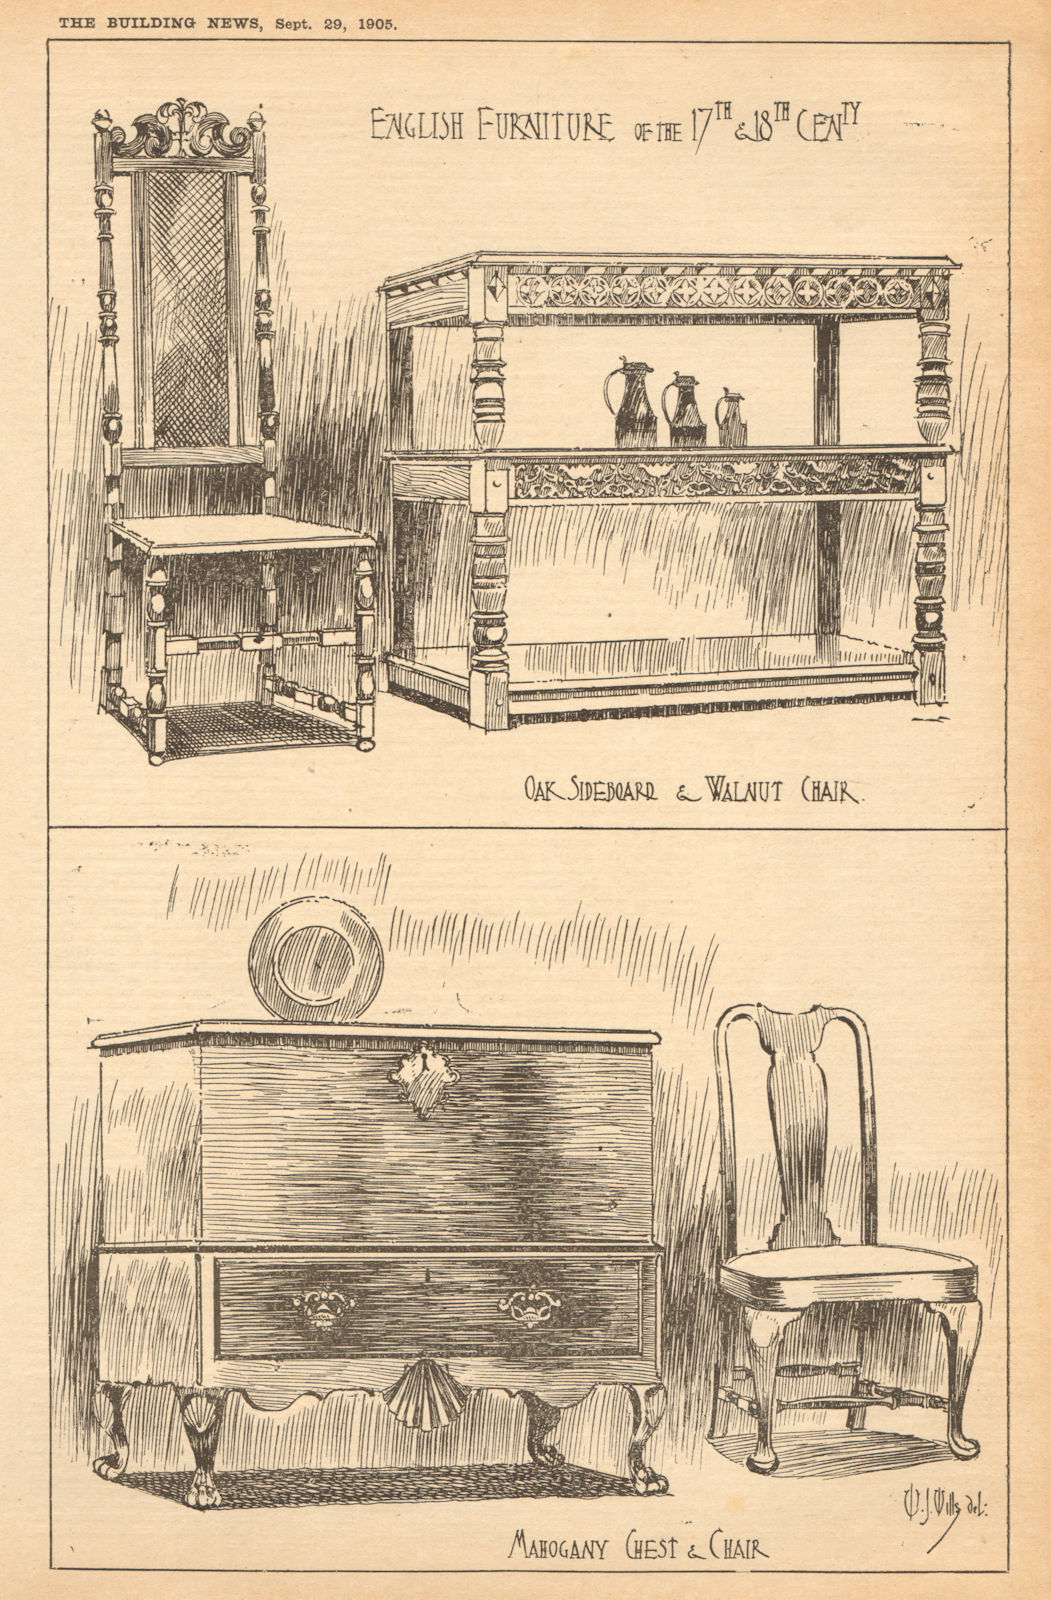 Associate Product 17-18th century English furniture Oak sideboard walnut chair mahogany chest 1905